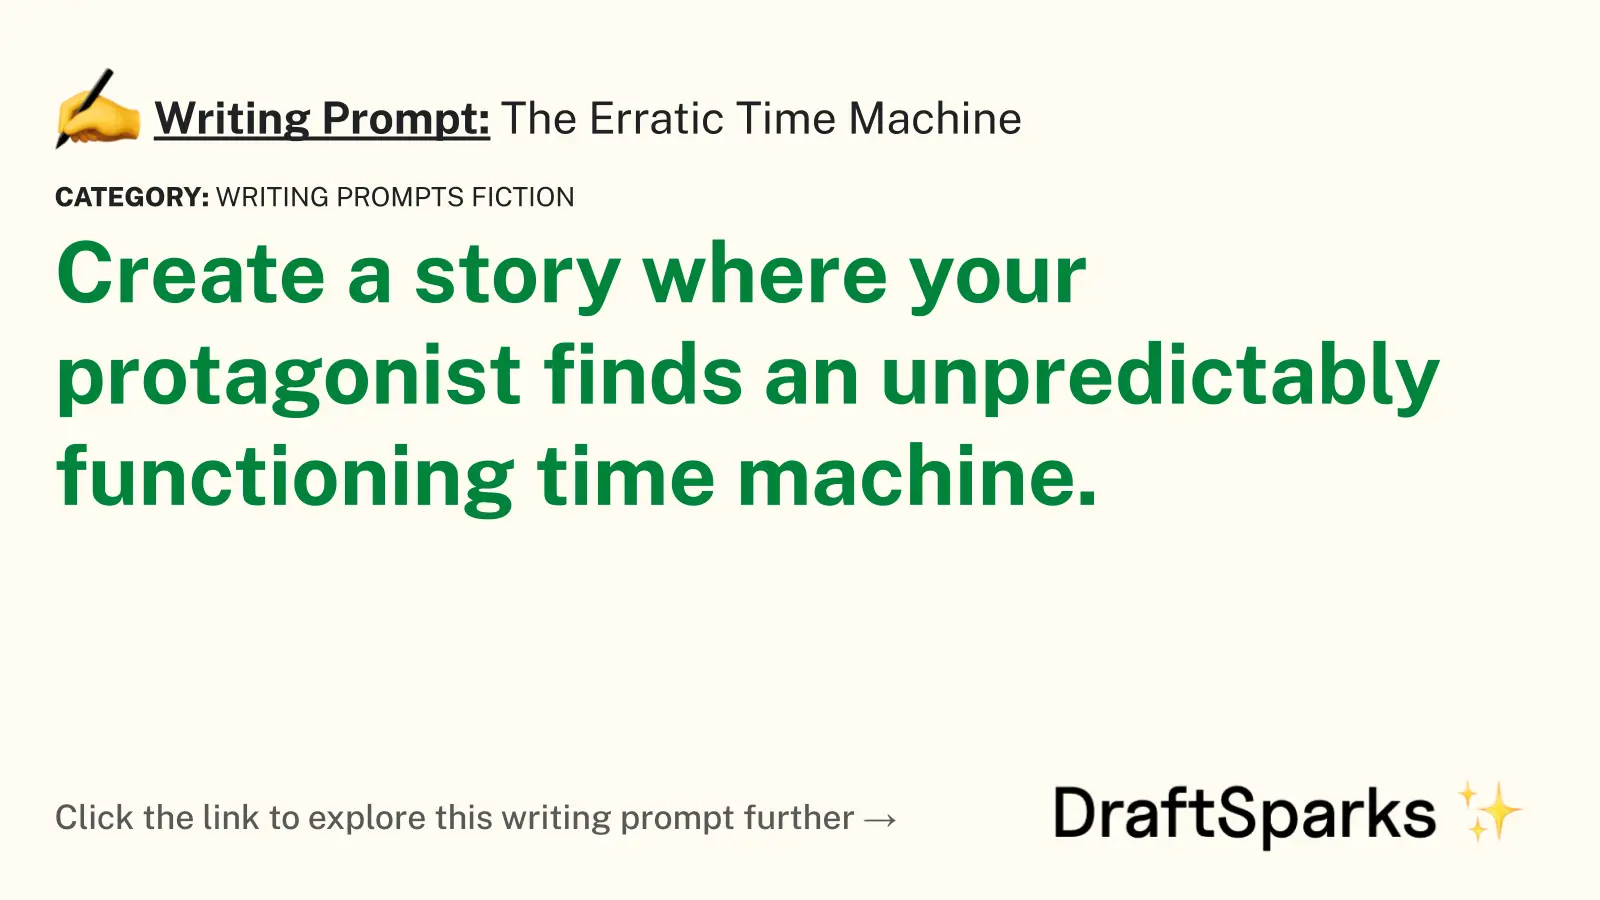 The Erratic Time Machine